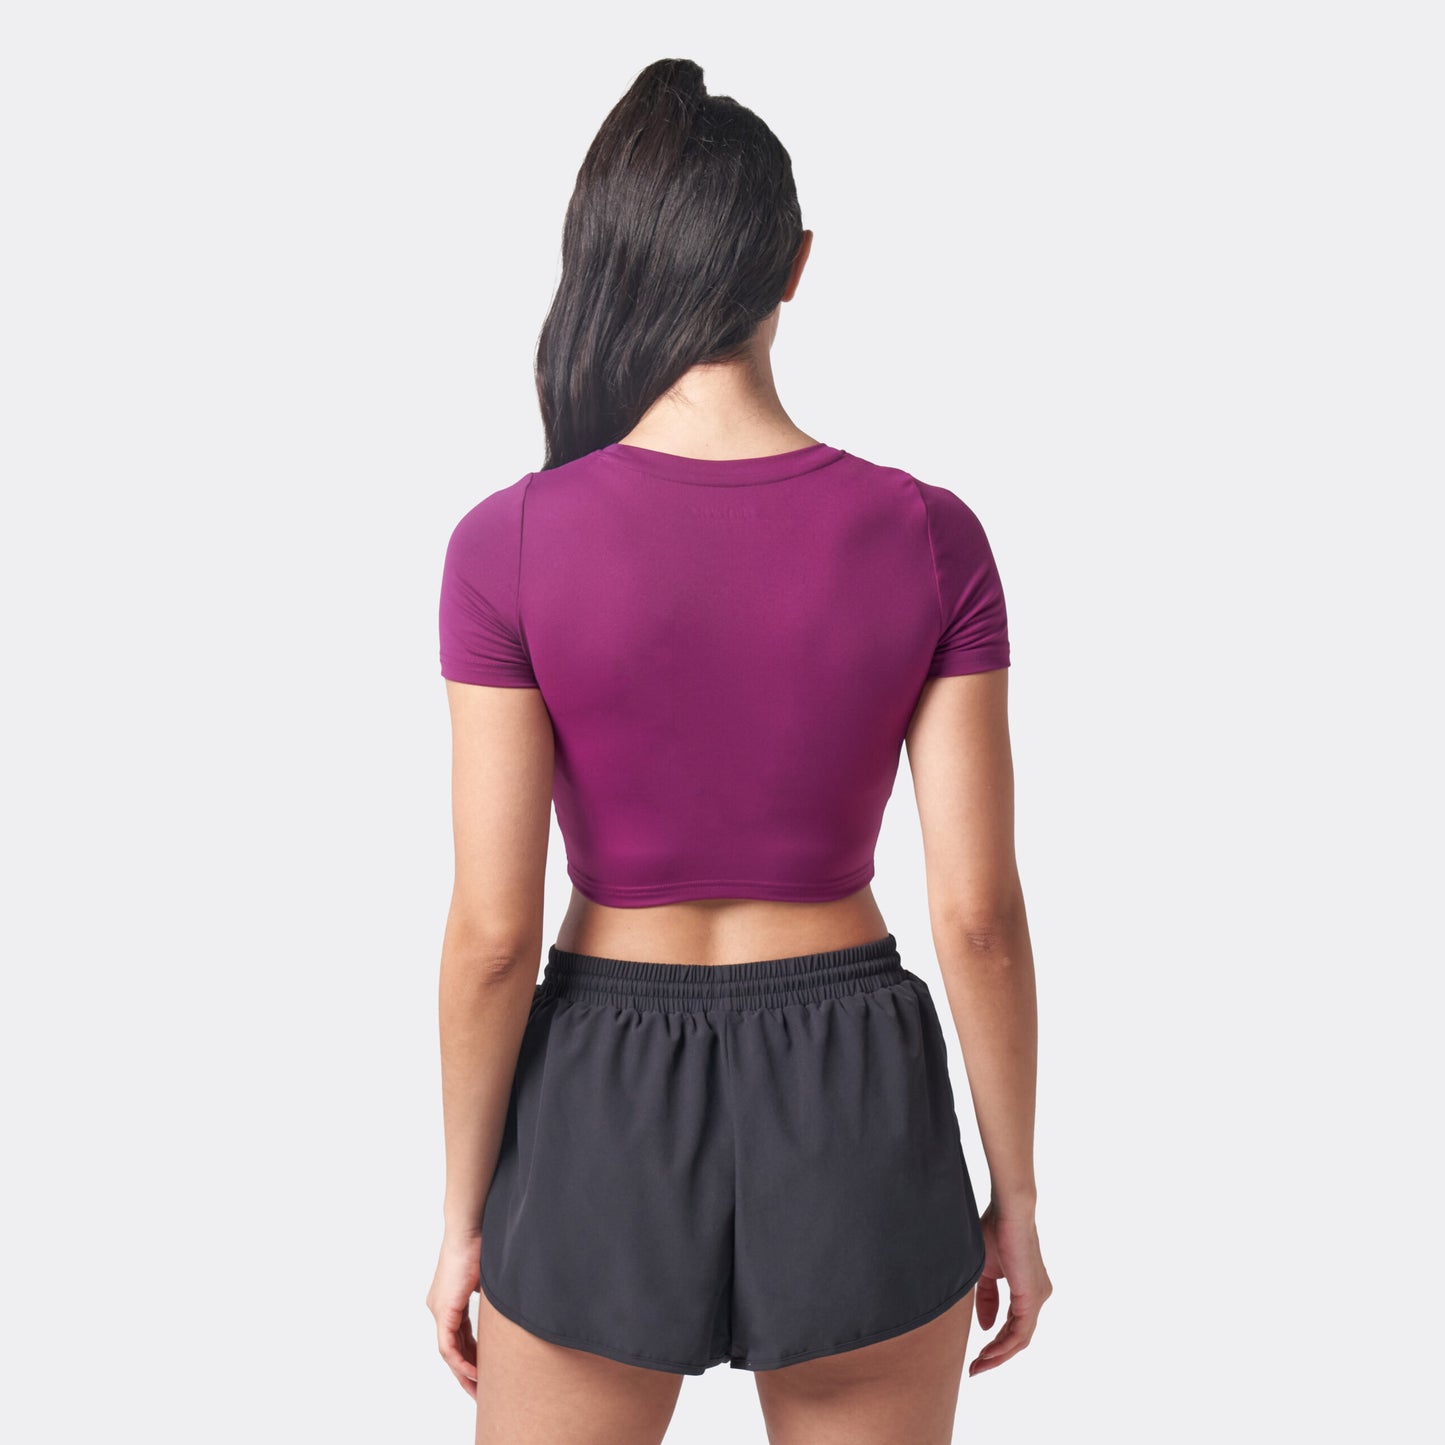 squatwolf-gym-wear-essential-cropped-tee-dark-purple-workout-tee-for-women